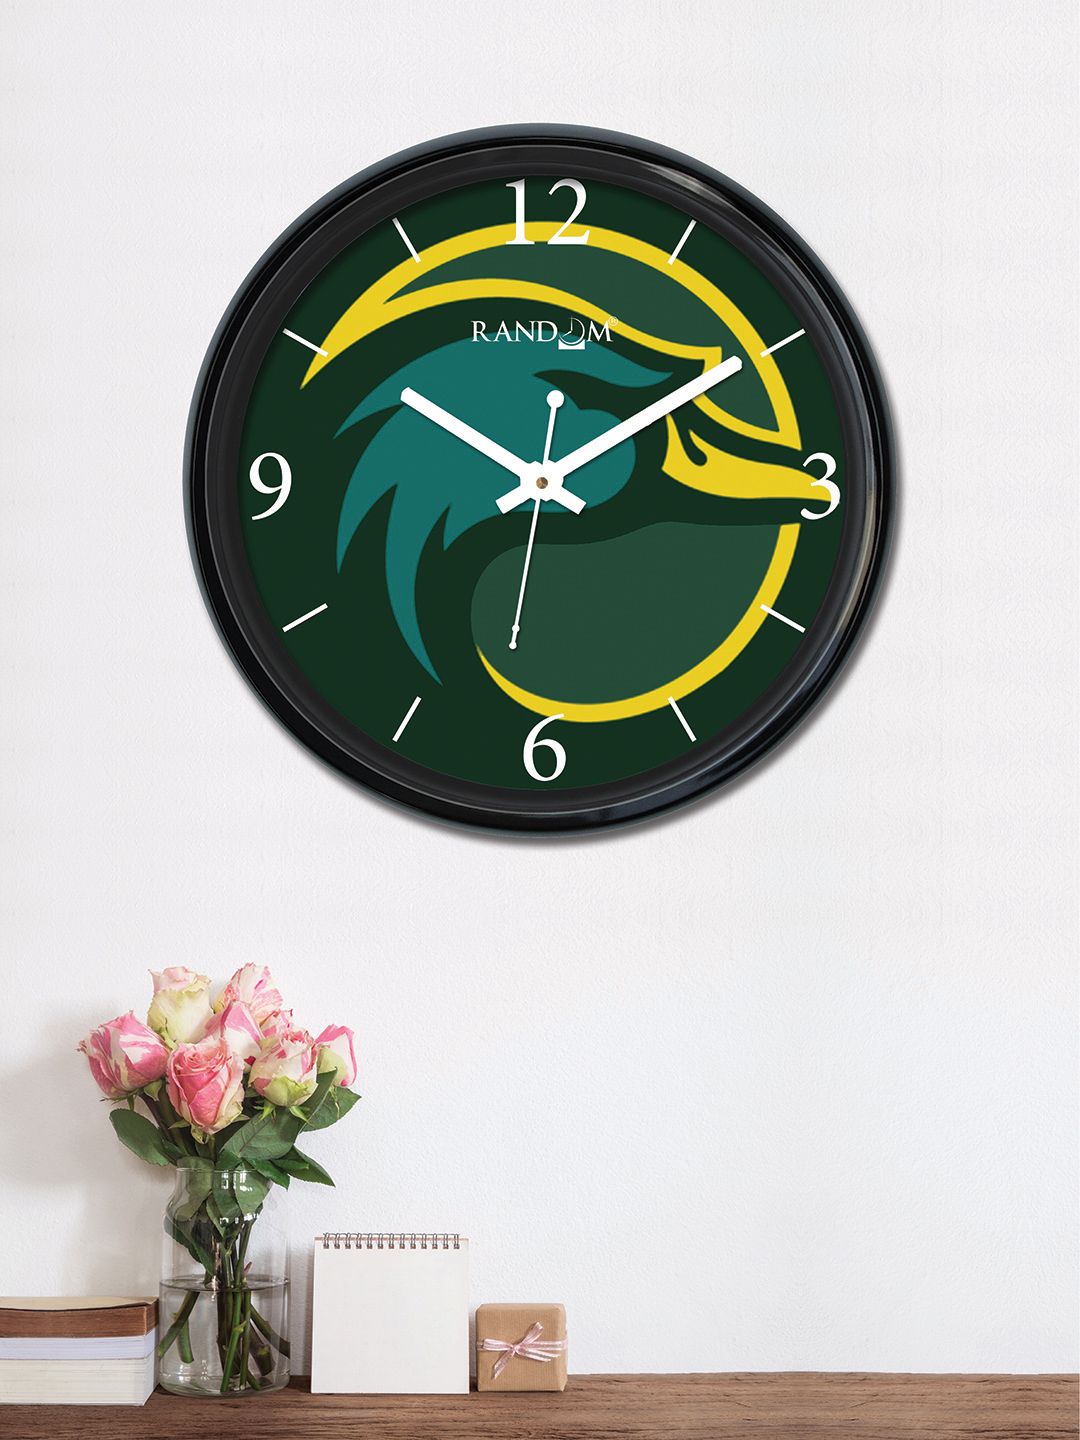 RANDOM Green & Yellow Round Printed 30 x 30 cm Analogue Wall Clock Price in India